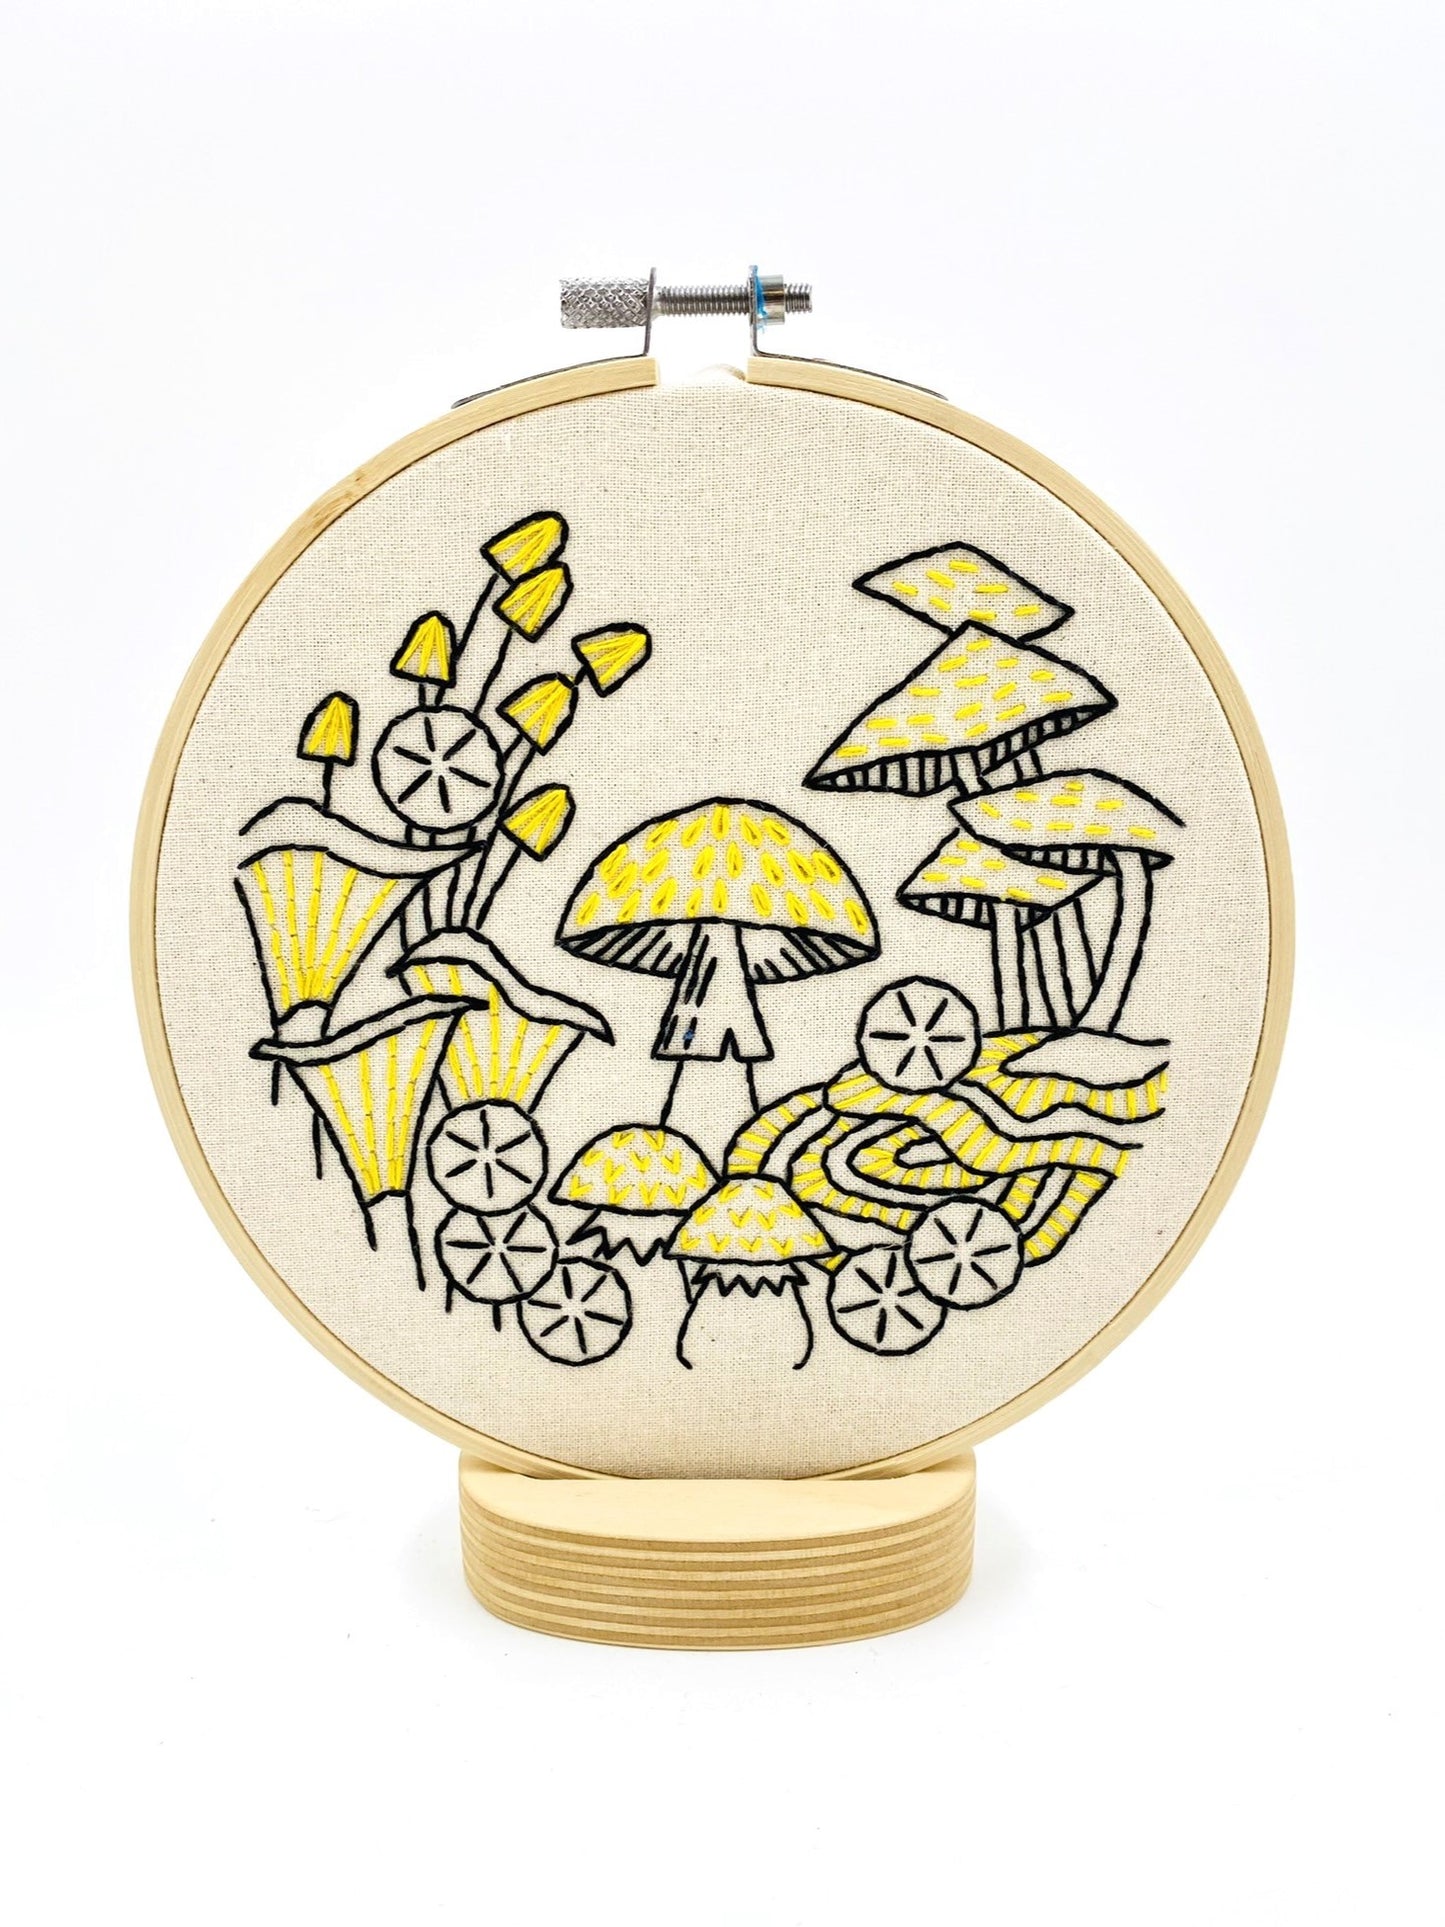 Mushroom Forest - Complete Embroidery Kit - 850030308023